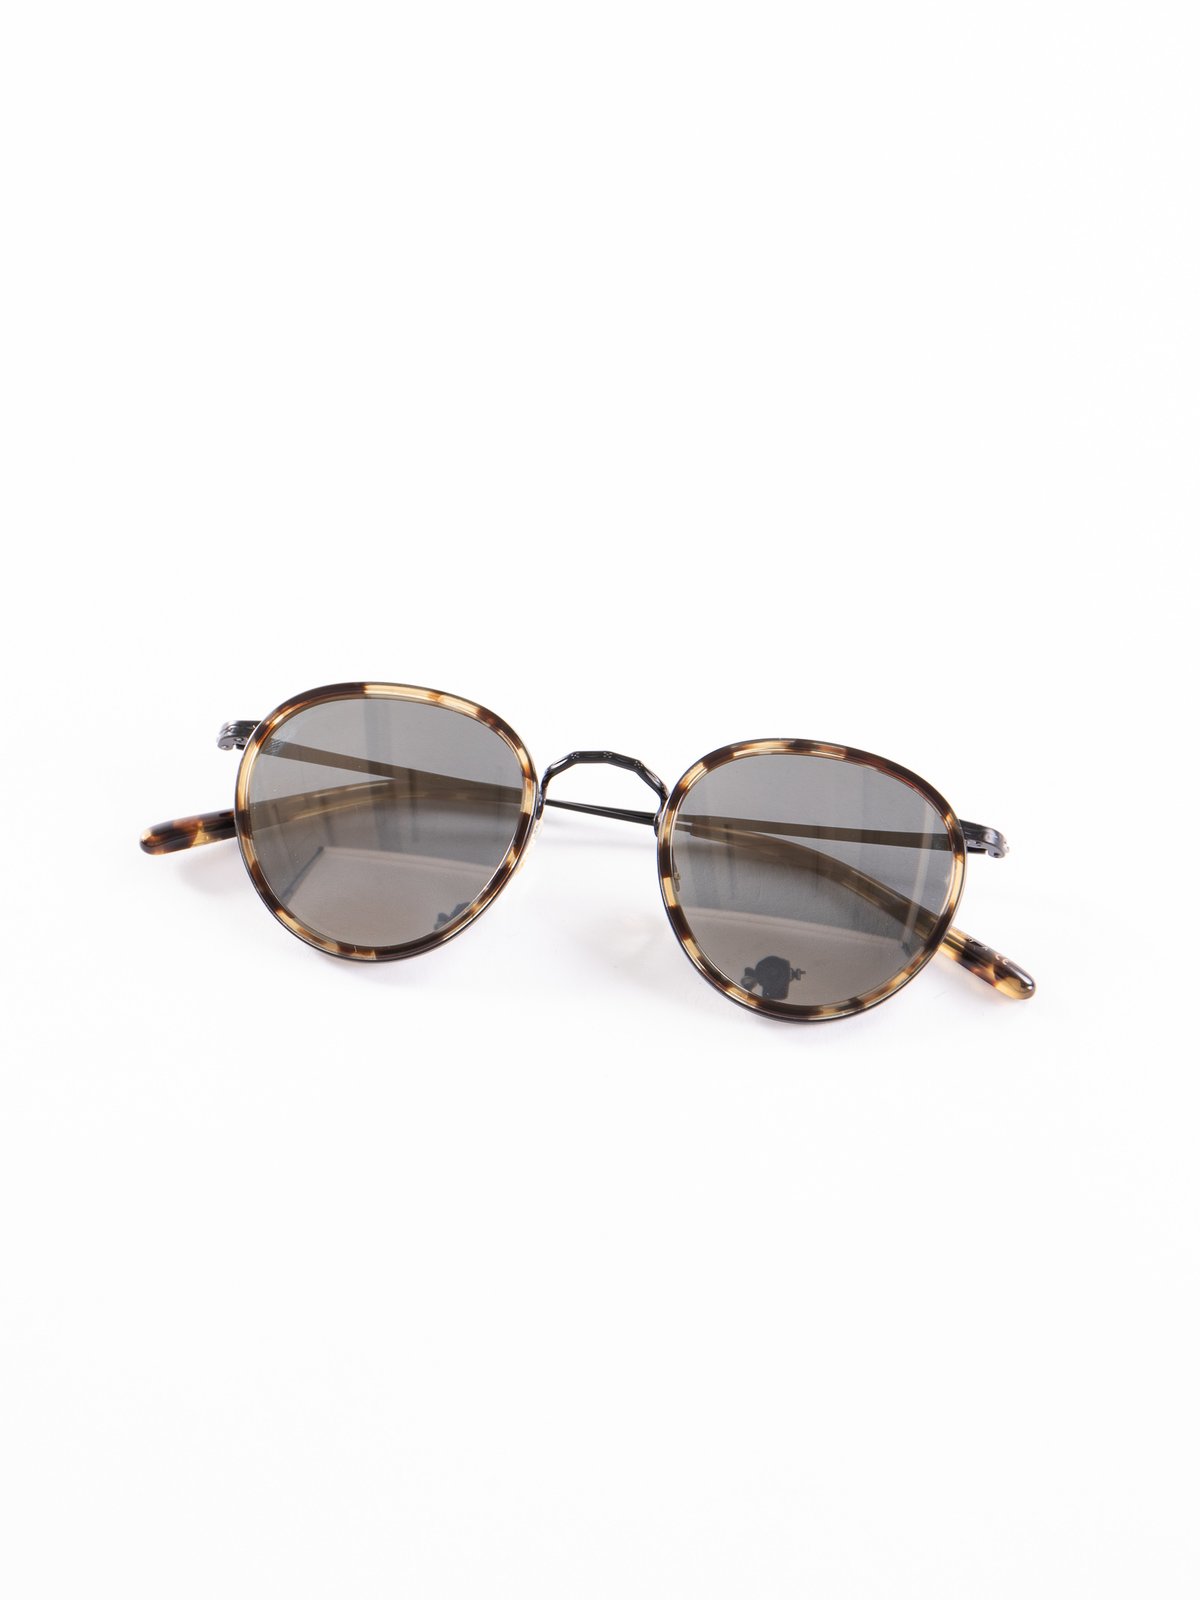 Hickory Tortoise–Matte Black/Dark Grey Mirror Gold MP–2 Sunglasses - Image 1